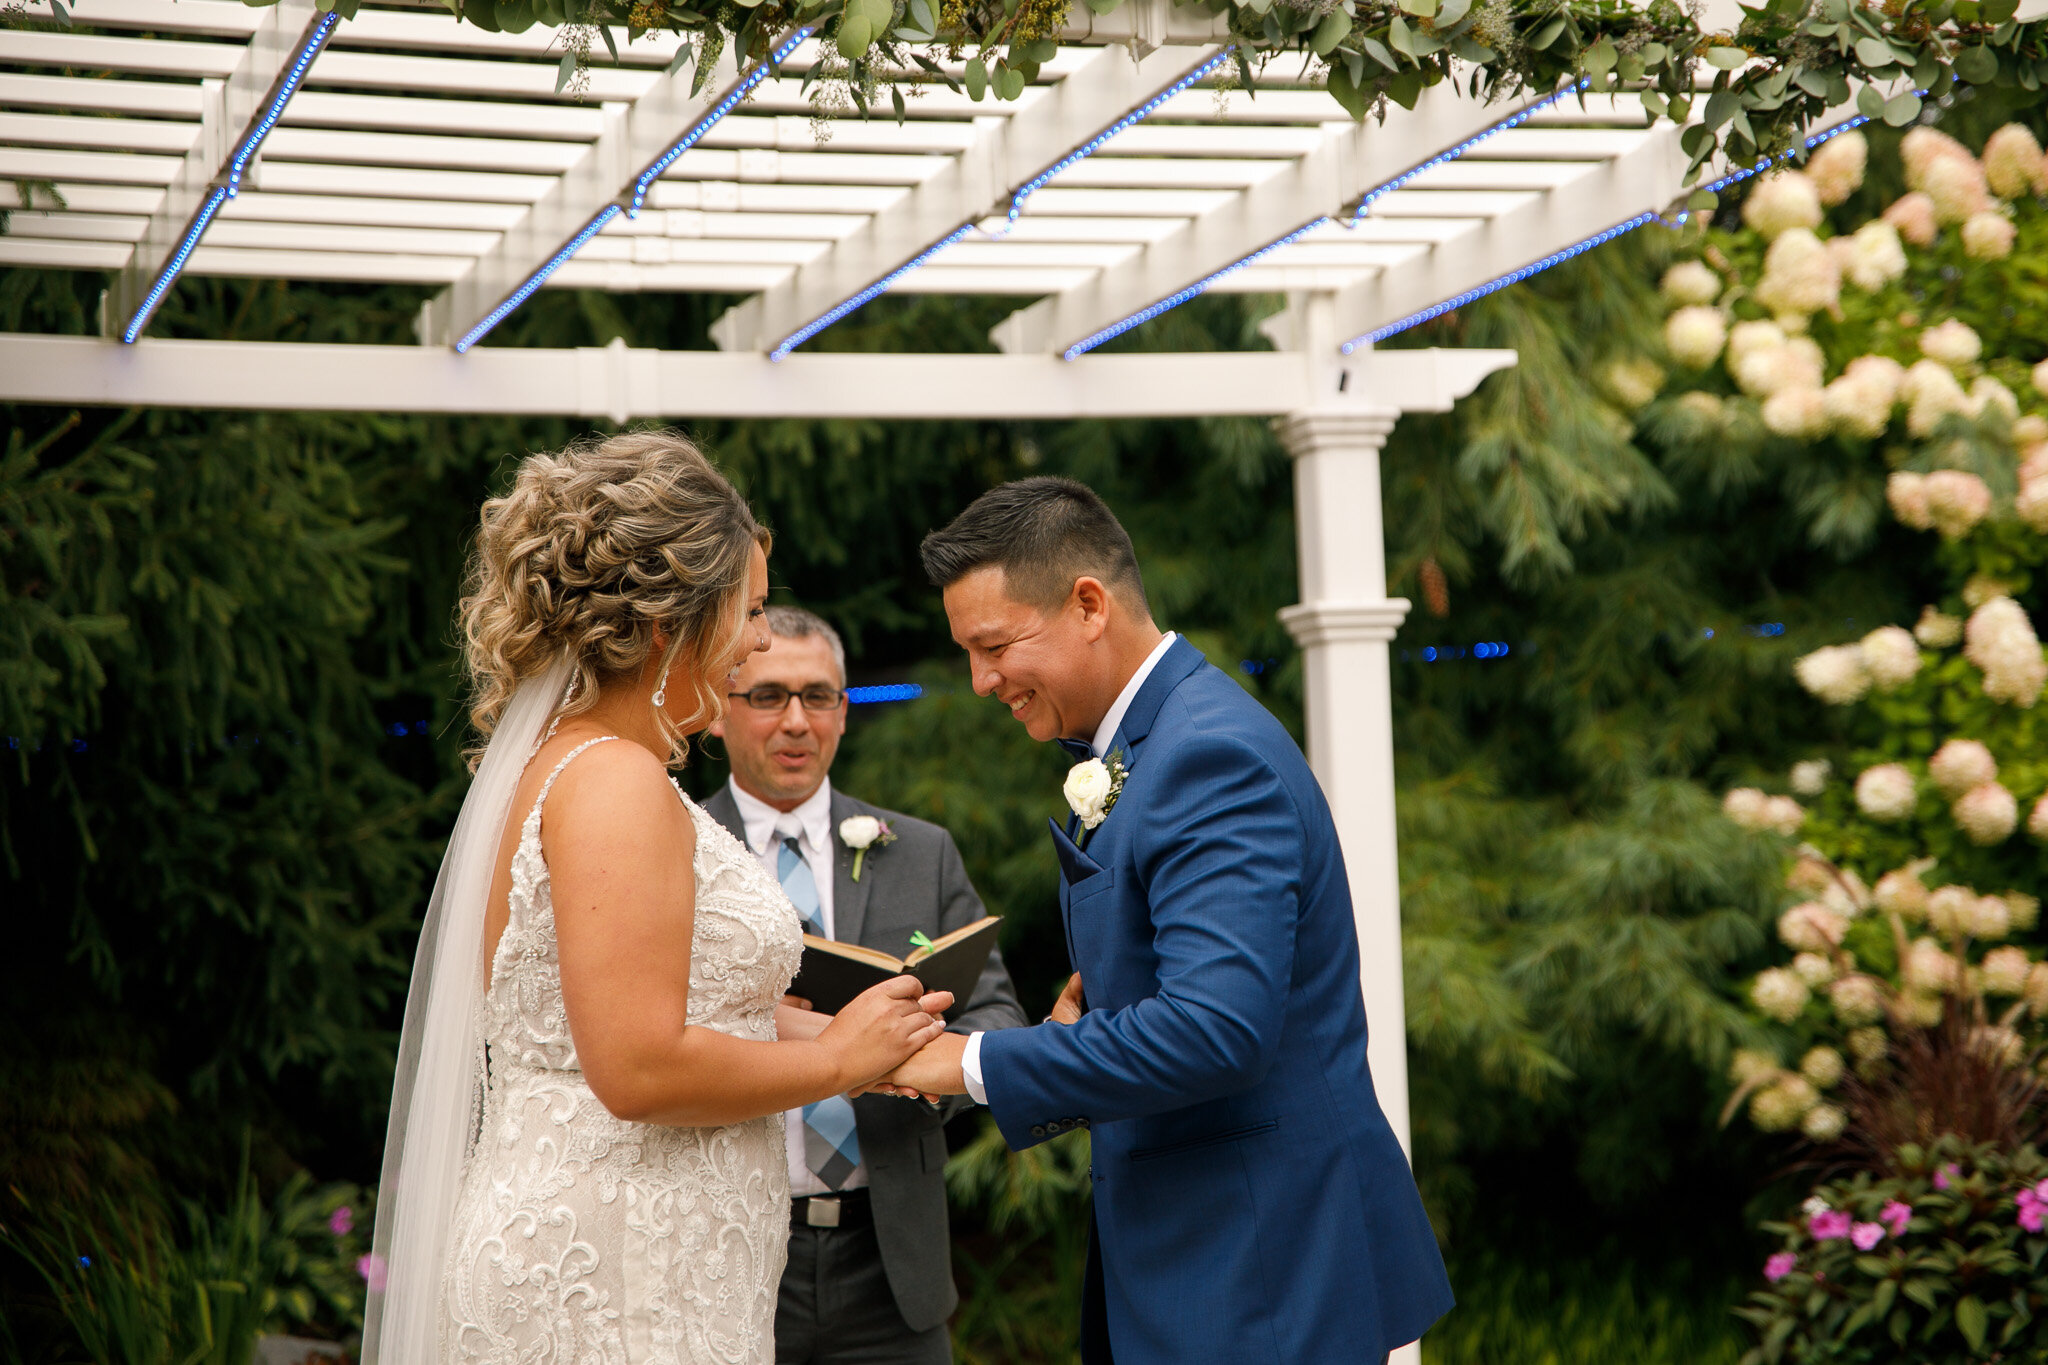 Pinnacle Center Wedding - Jillian and Rodrigo Wedding - Grand Rapids Wedding Photographer - West Michigan Wedding Photographer - West Michigan Wedding - Farmhouse Wedding - J Darling Photo083.jpg